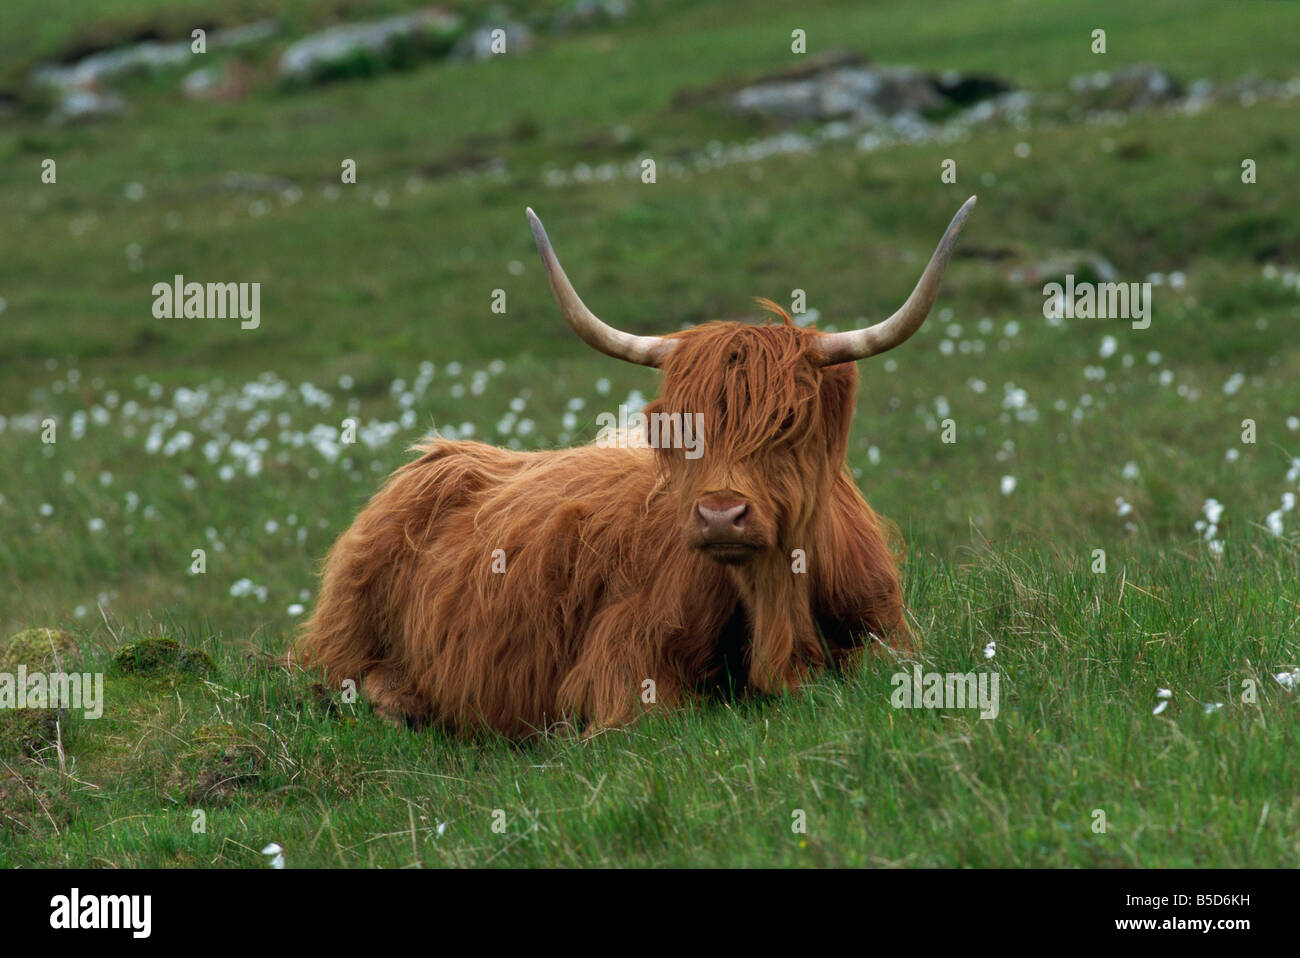 Highland Cattle Isle of Mull Scotland R Rainford Stock Photo